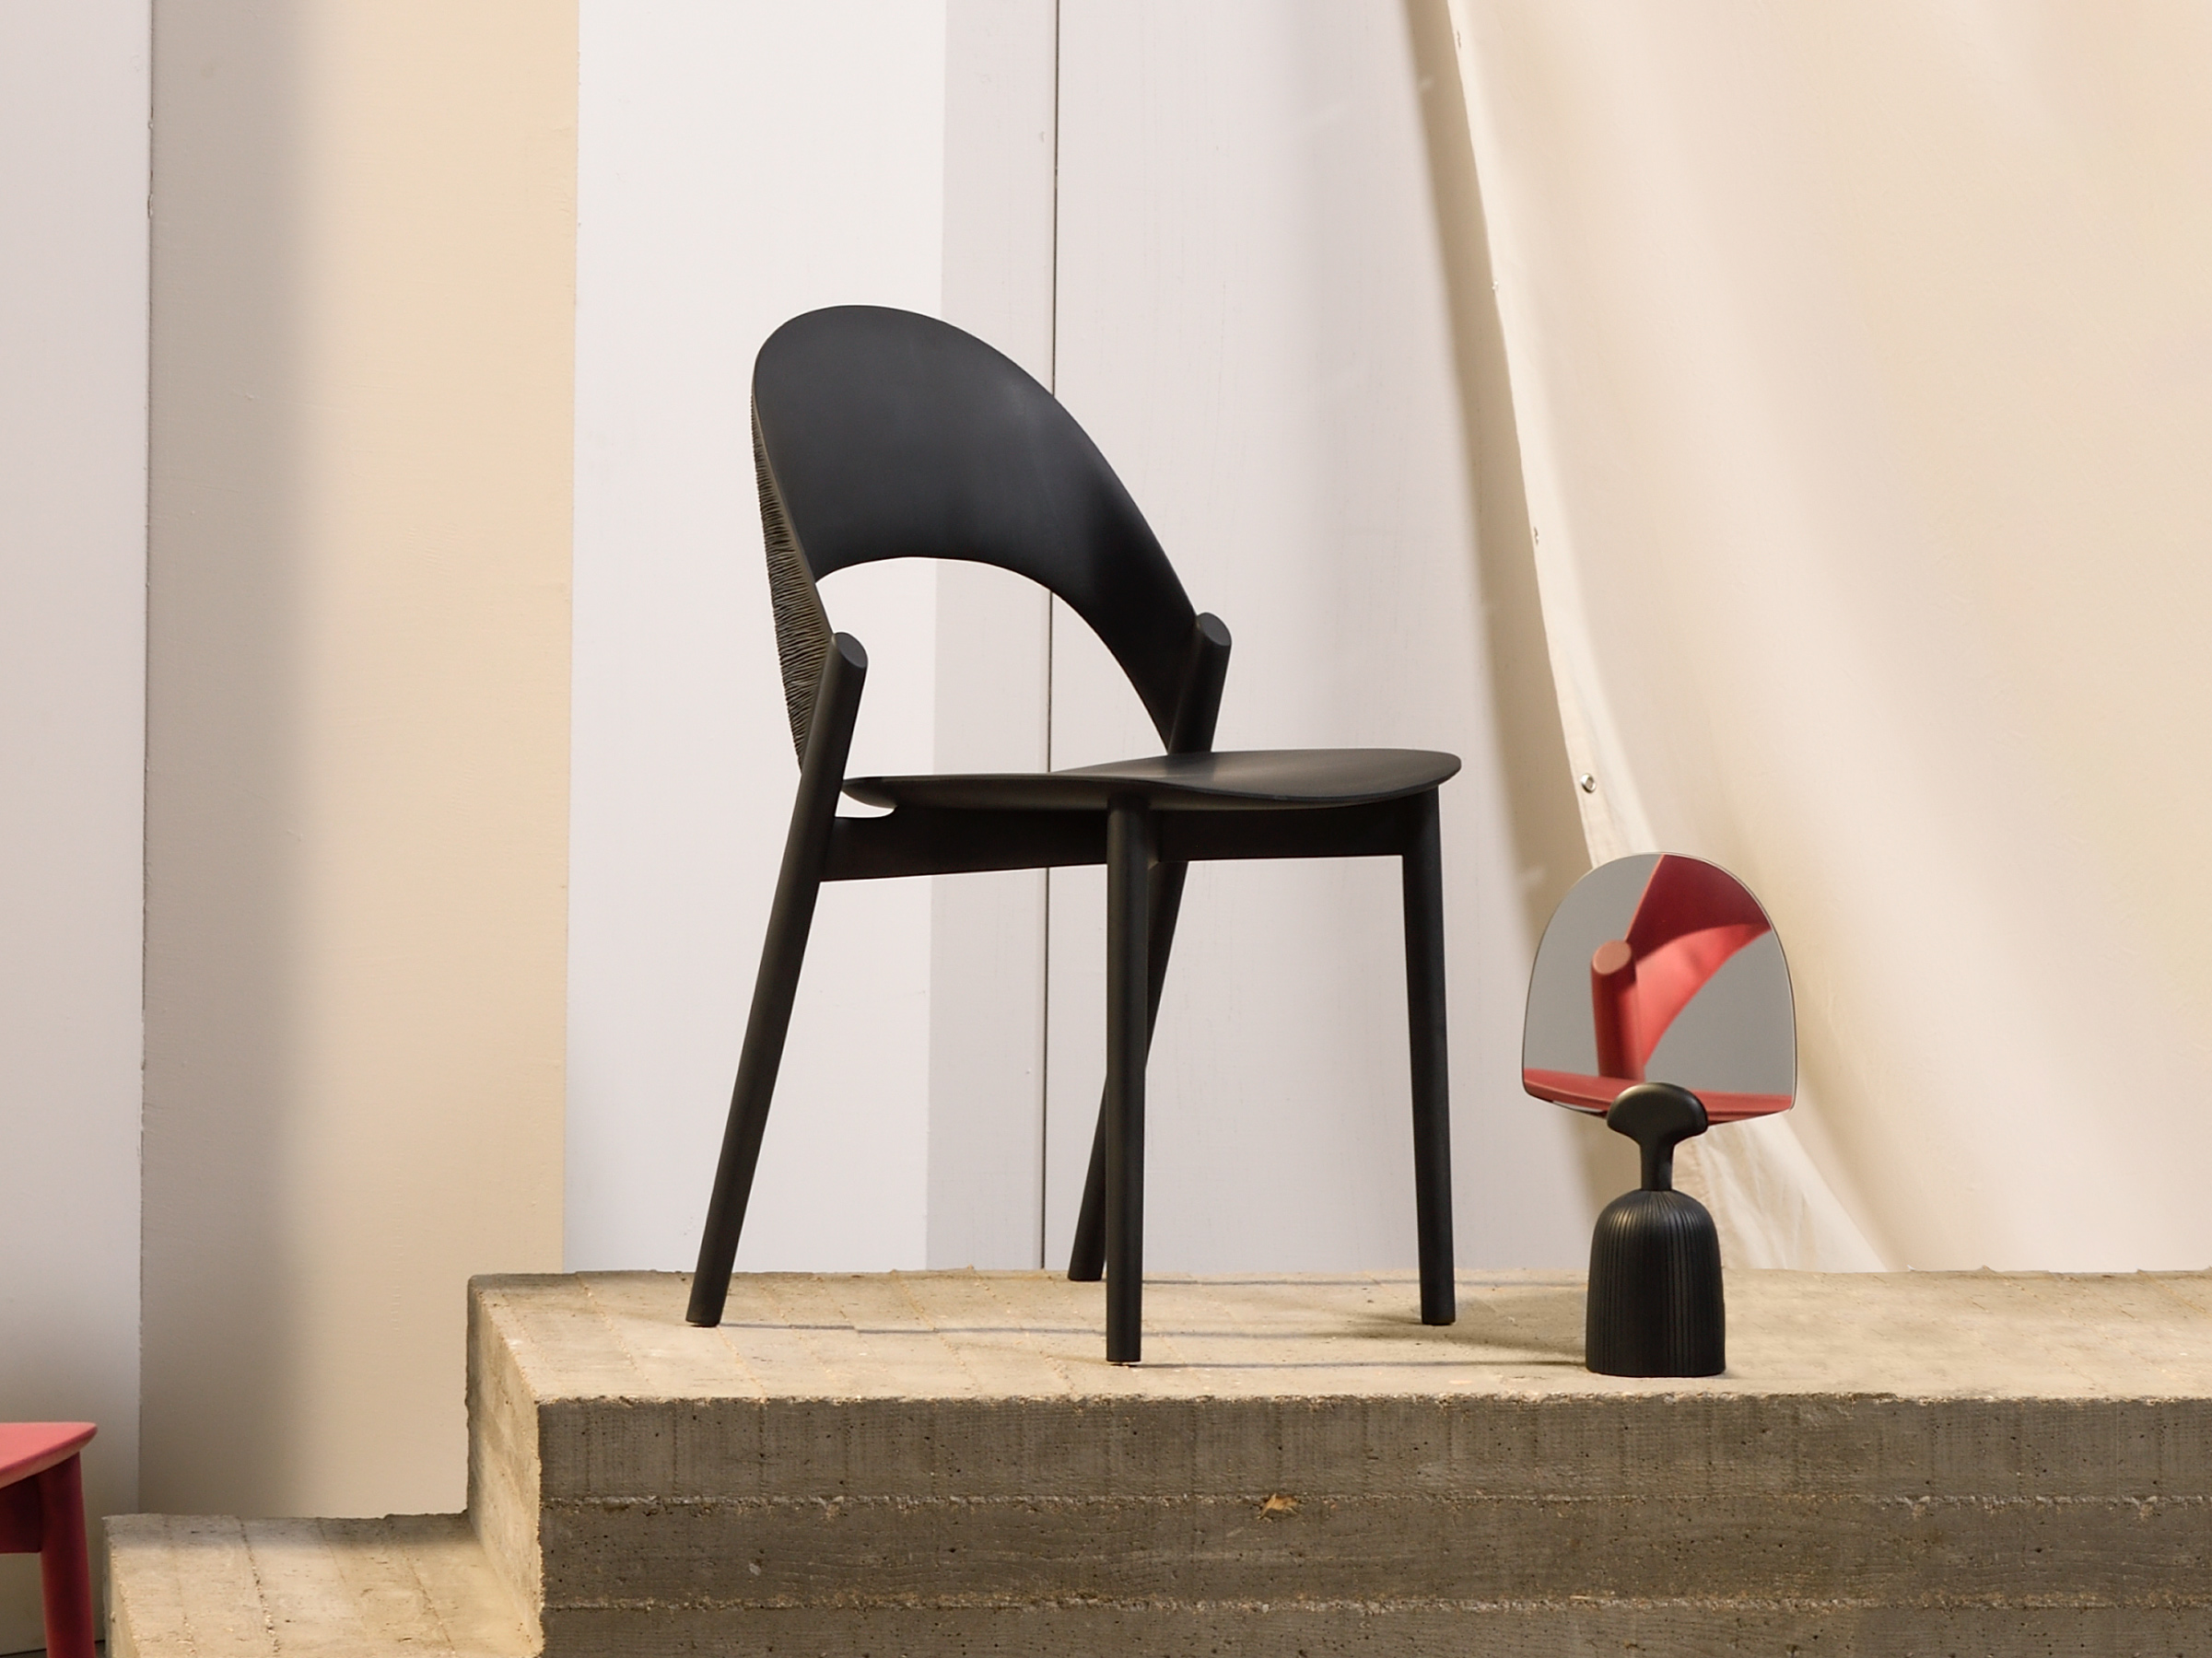 Zanat, Sana Chair, Monica Förster Design Studio